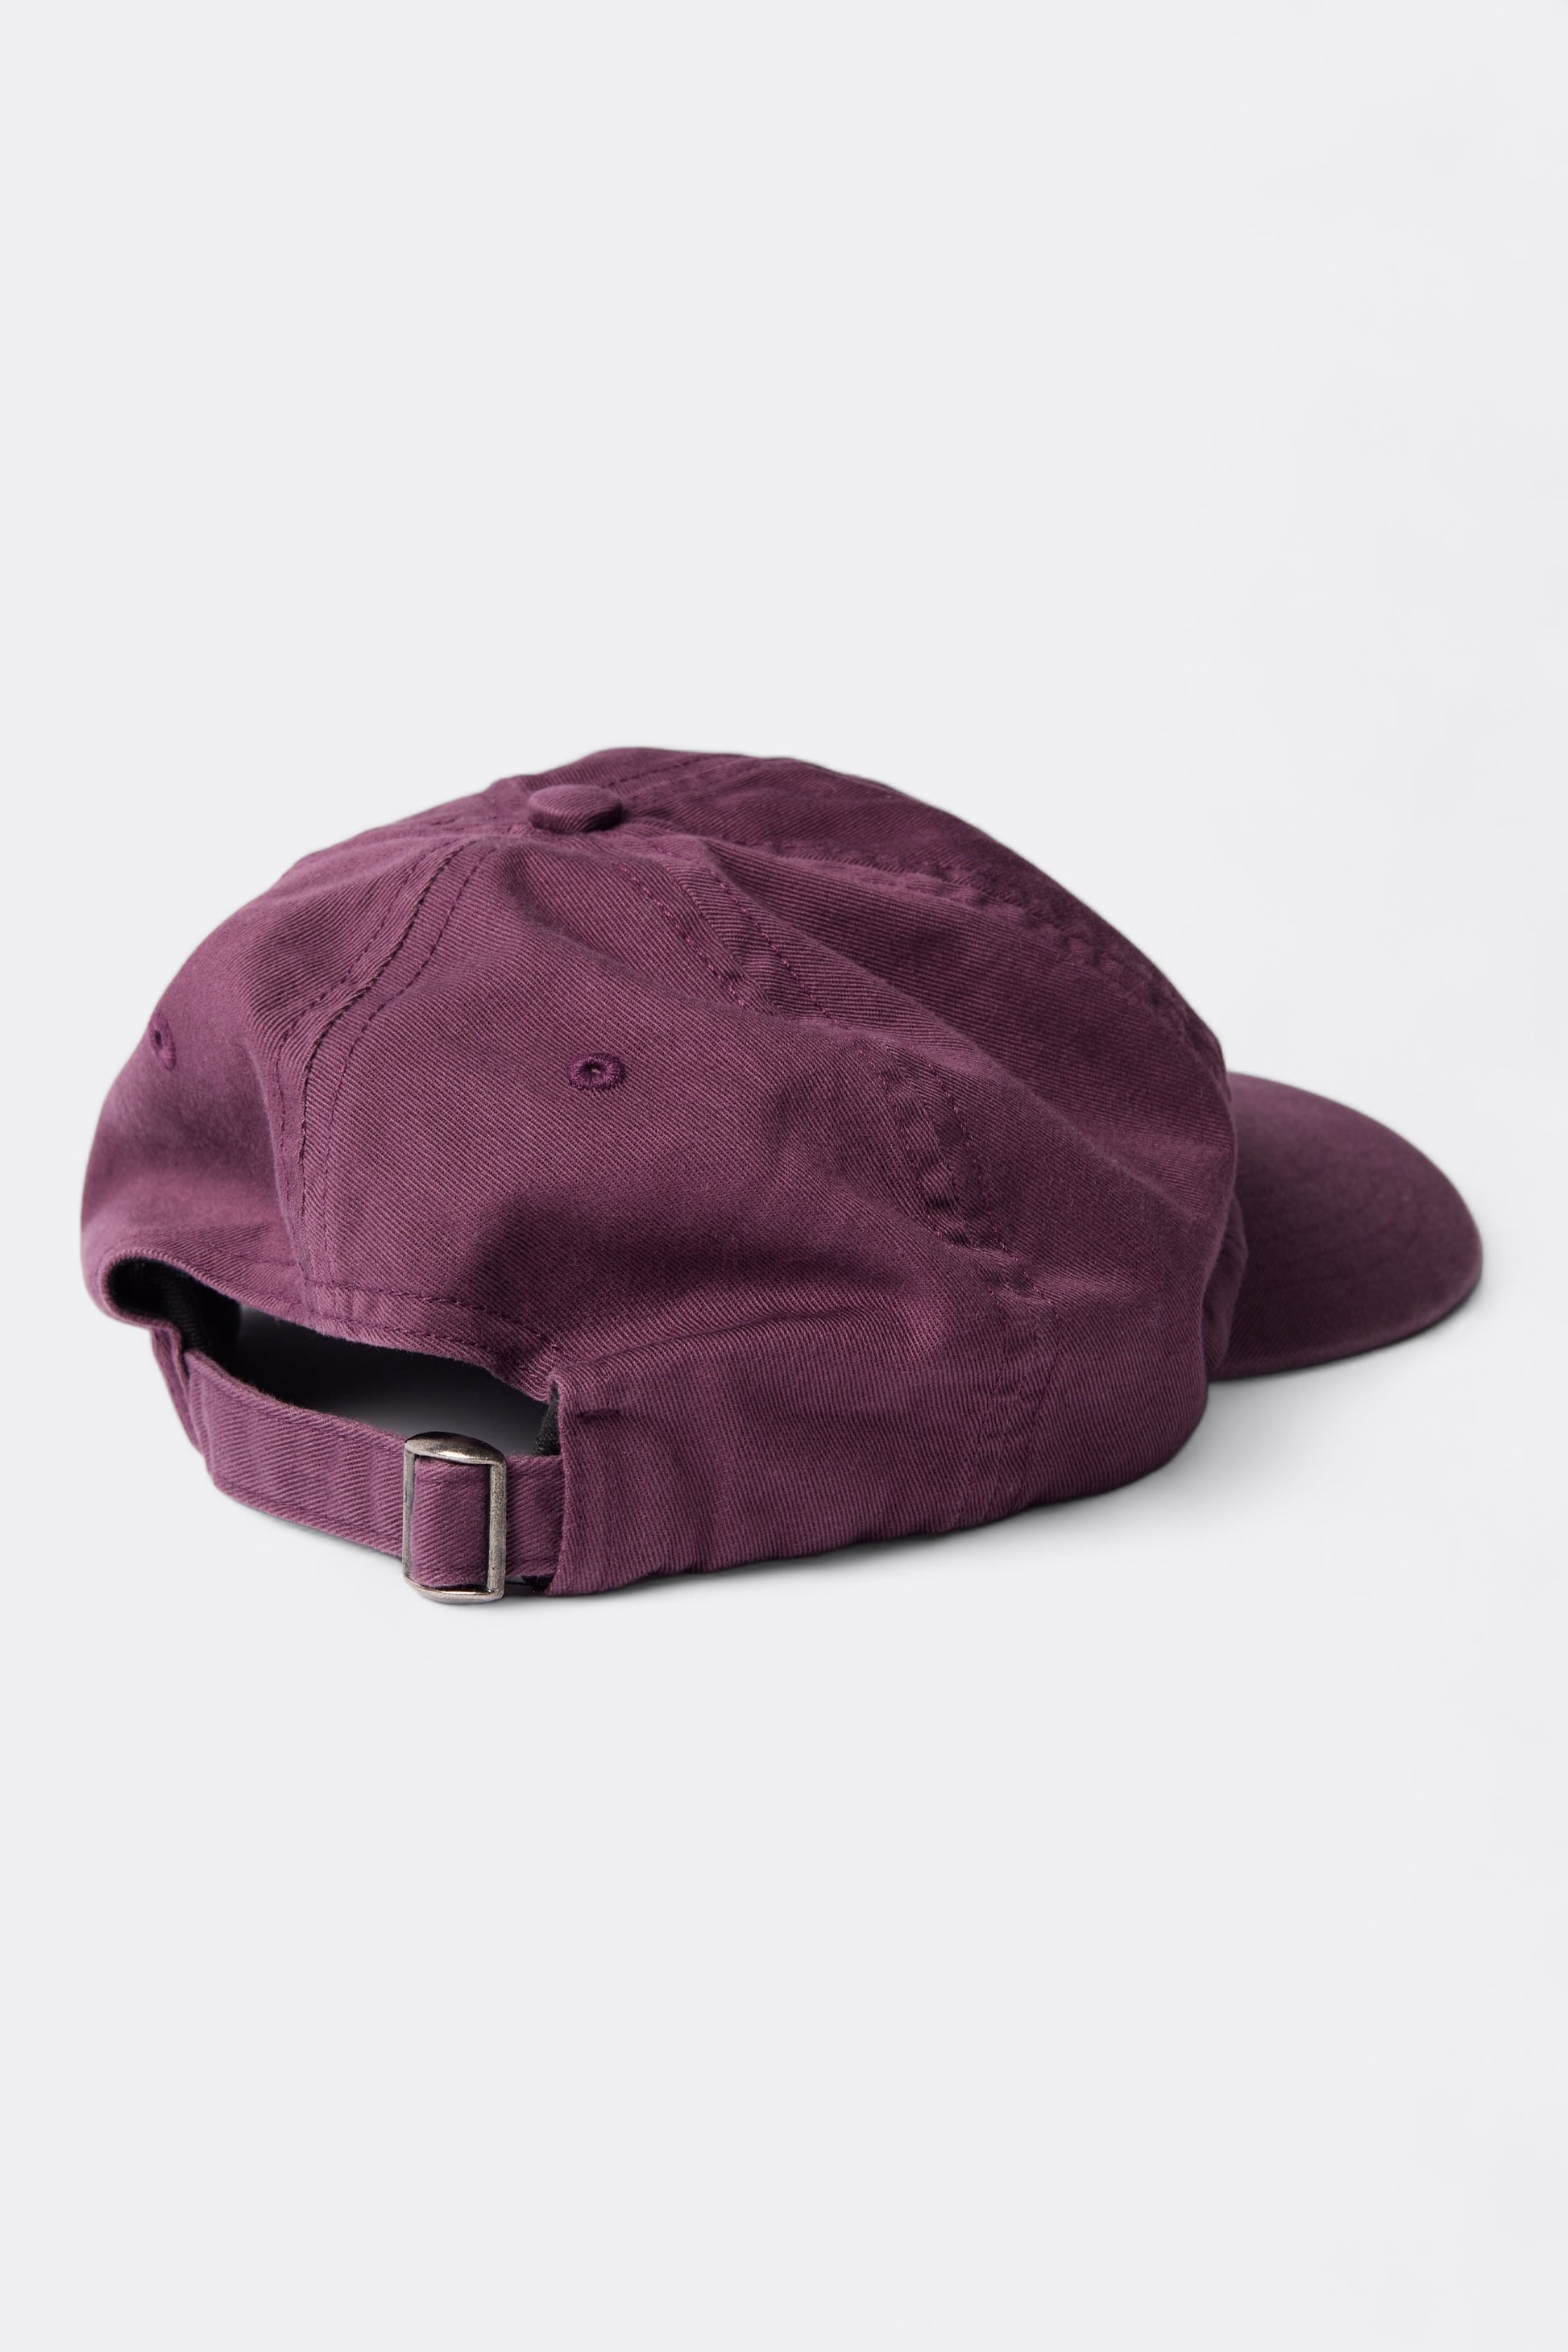 Parra - Script Logo 6 Panel Hat (Dark Violet)